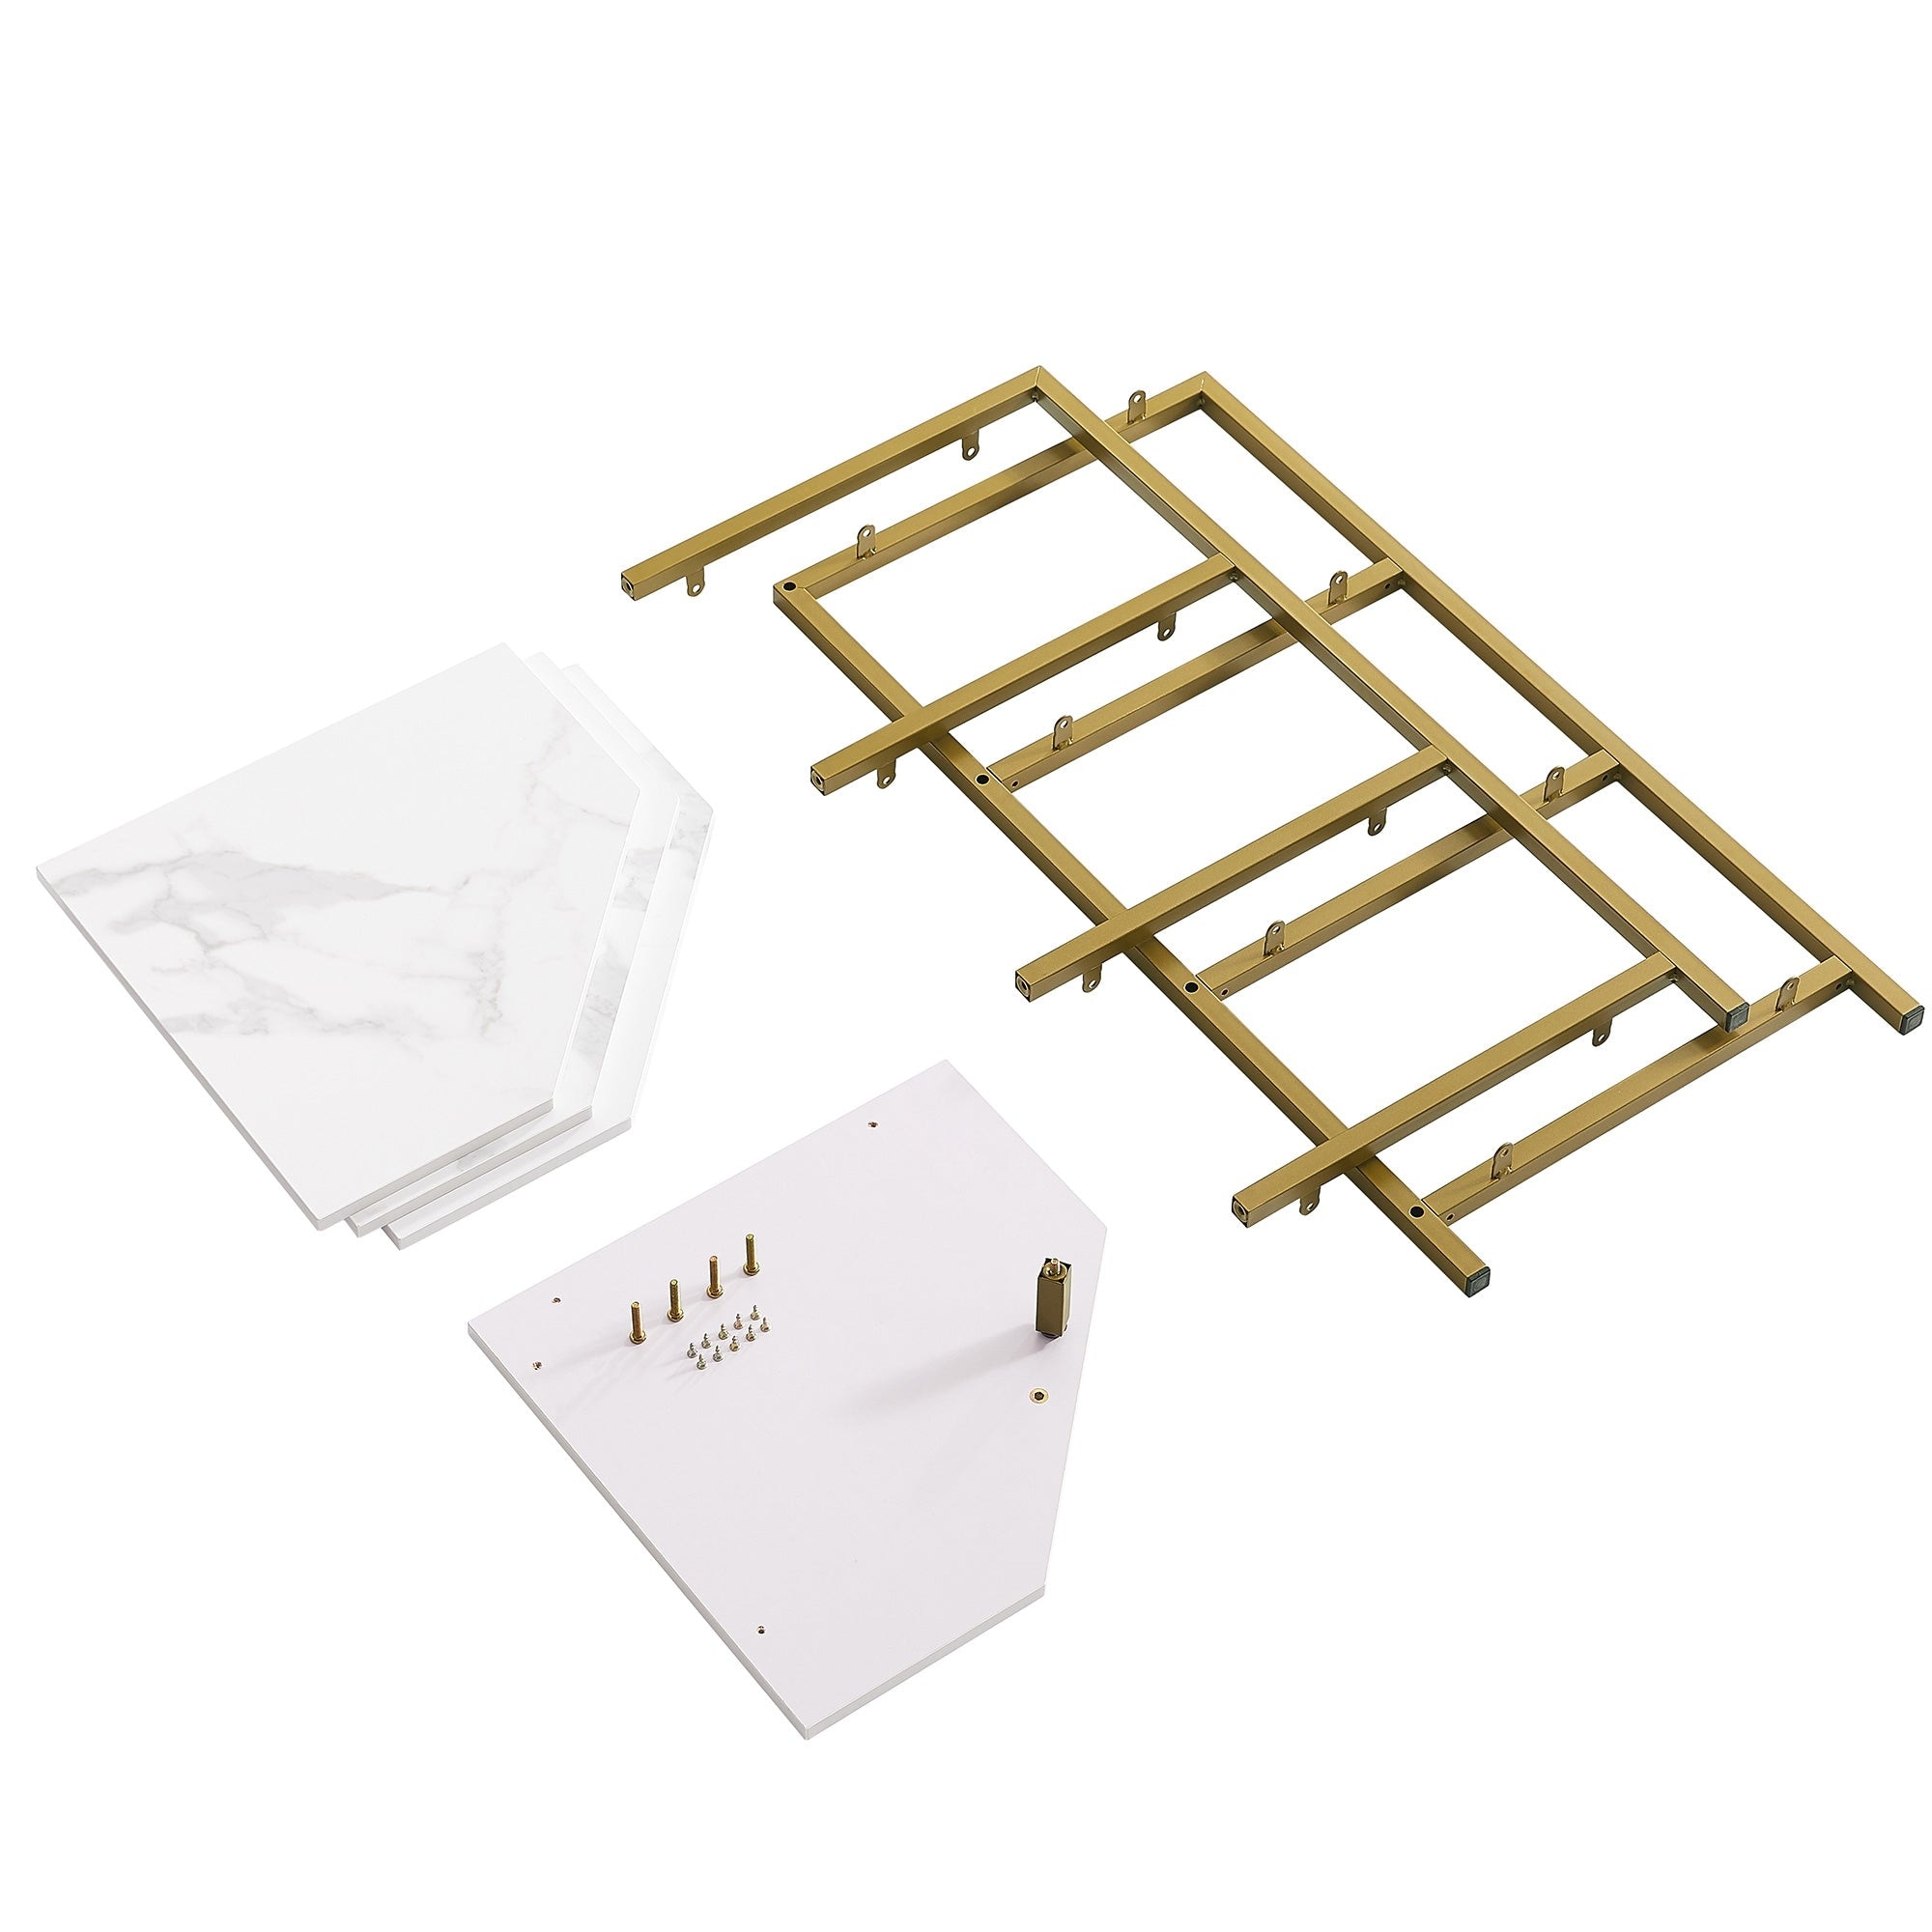 VECELO 4-Tier Ladder Corner Storage Shelf with Metal Frame, Multipurpo